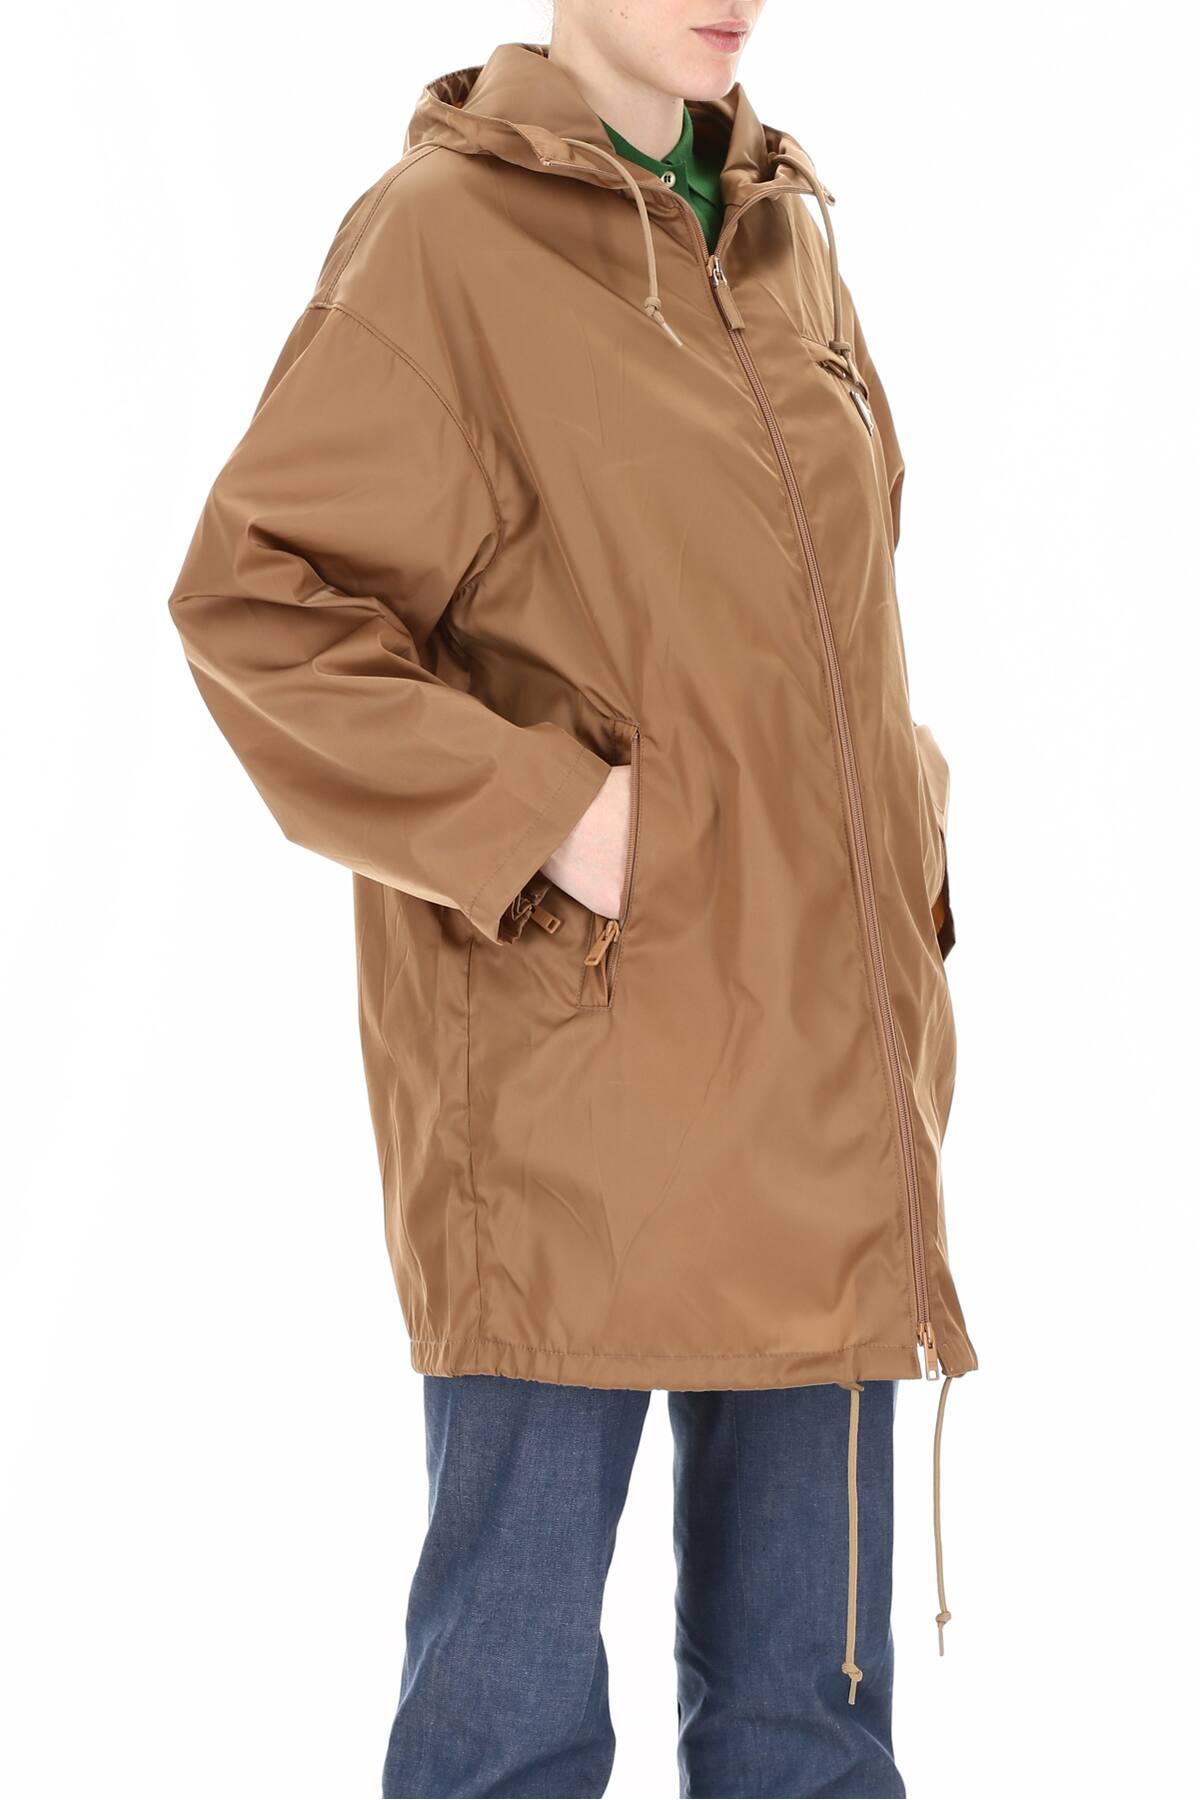 Prada Synthetic Nylon Raincoat in Brown - Lyst